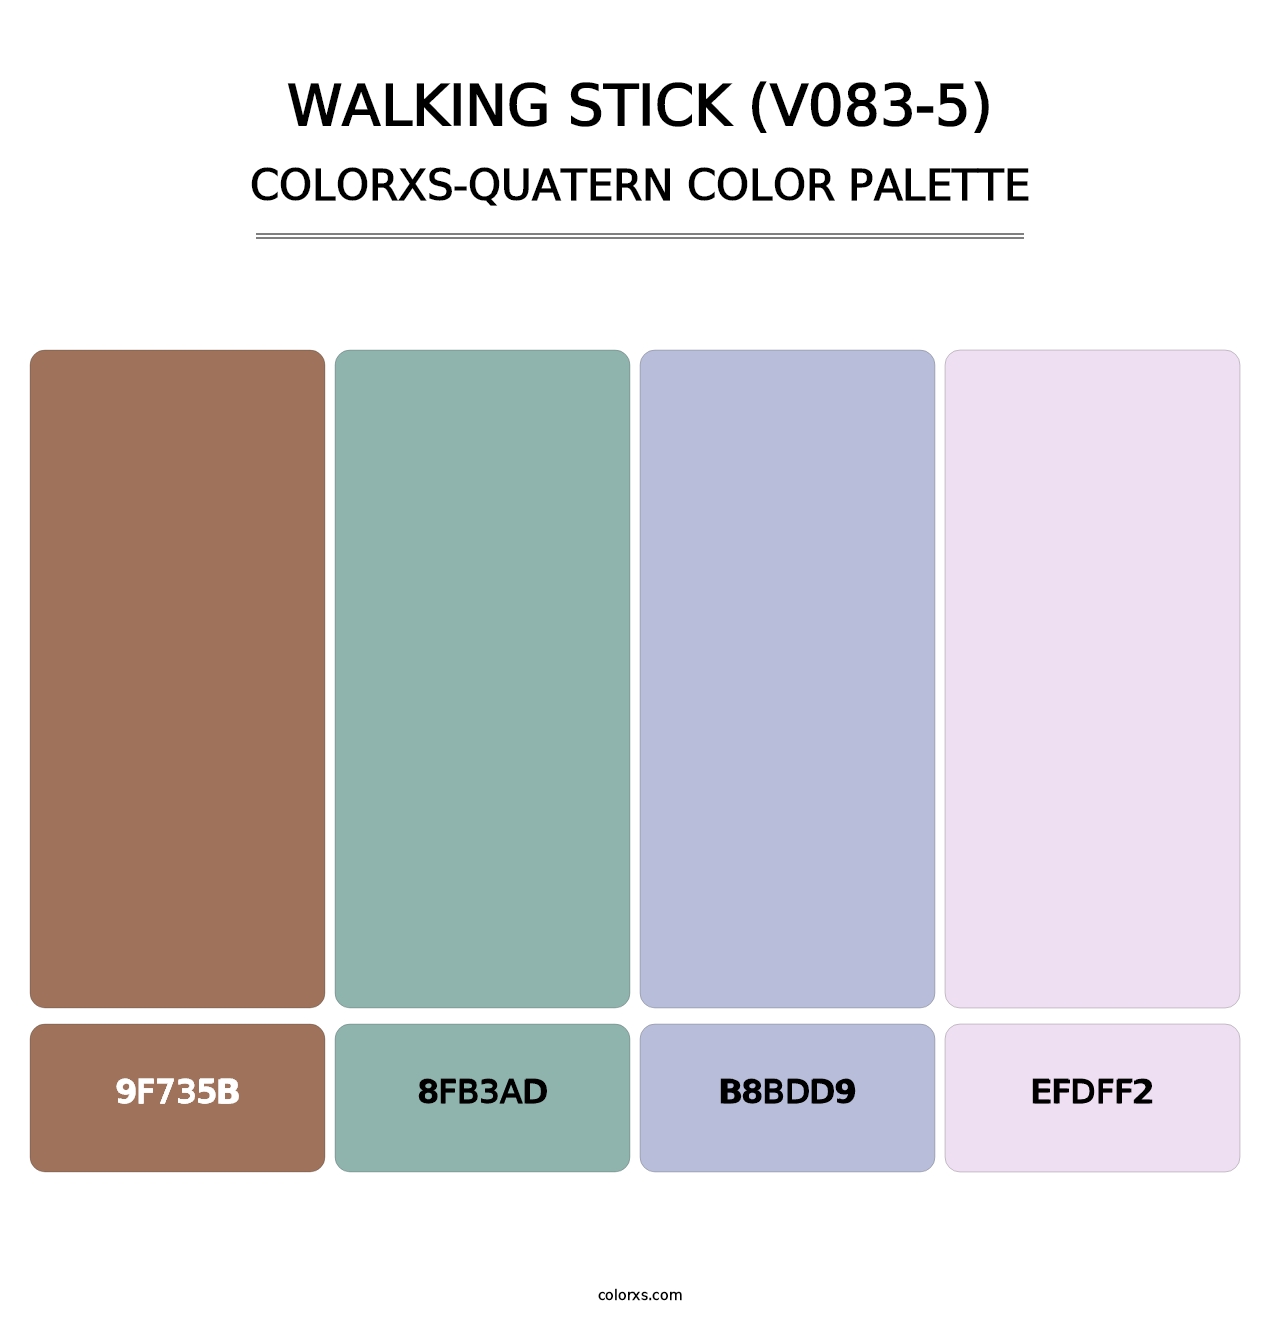 Walking Stick (V083-5) - Colorxs Quatern Palette